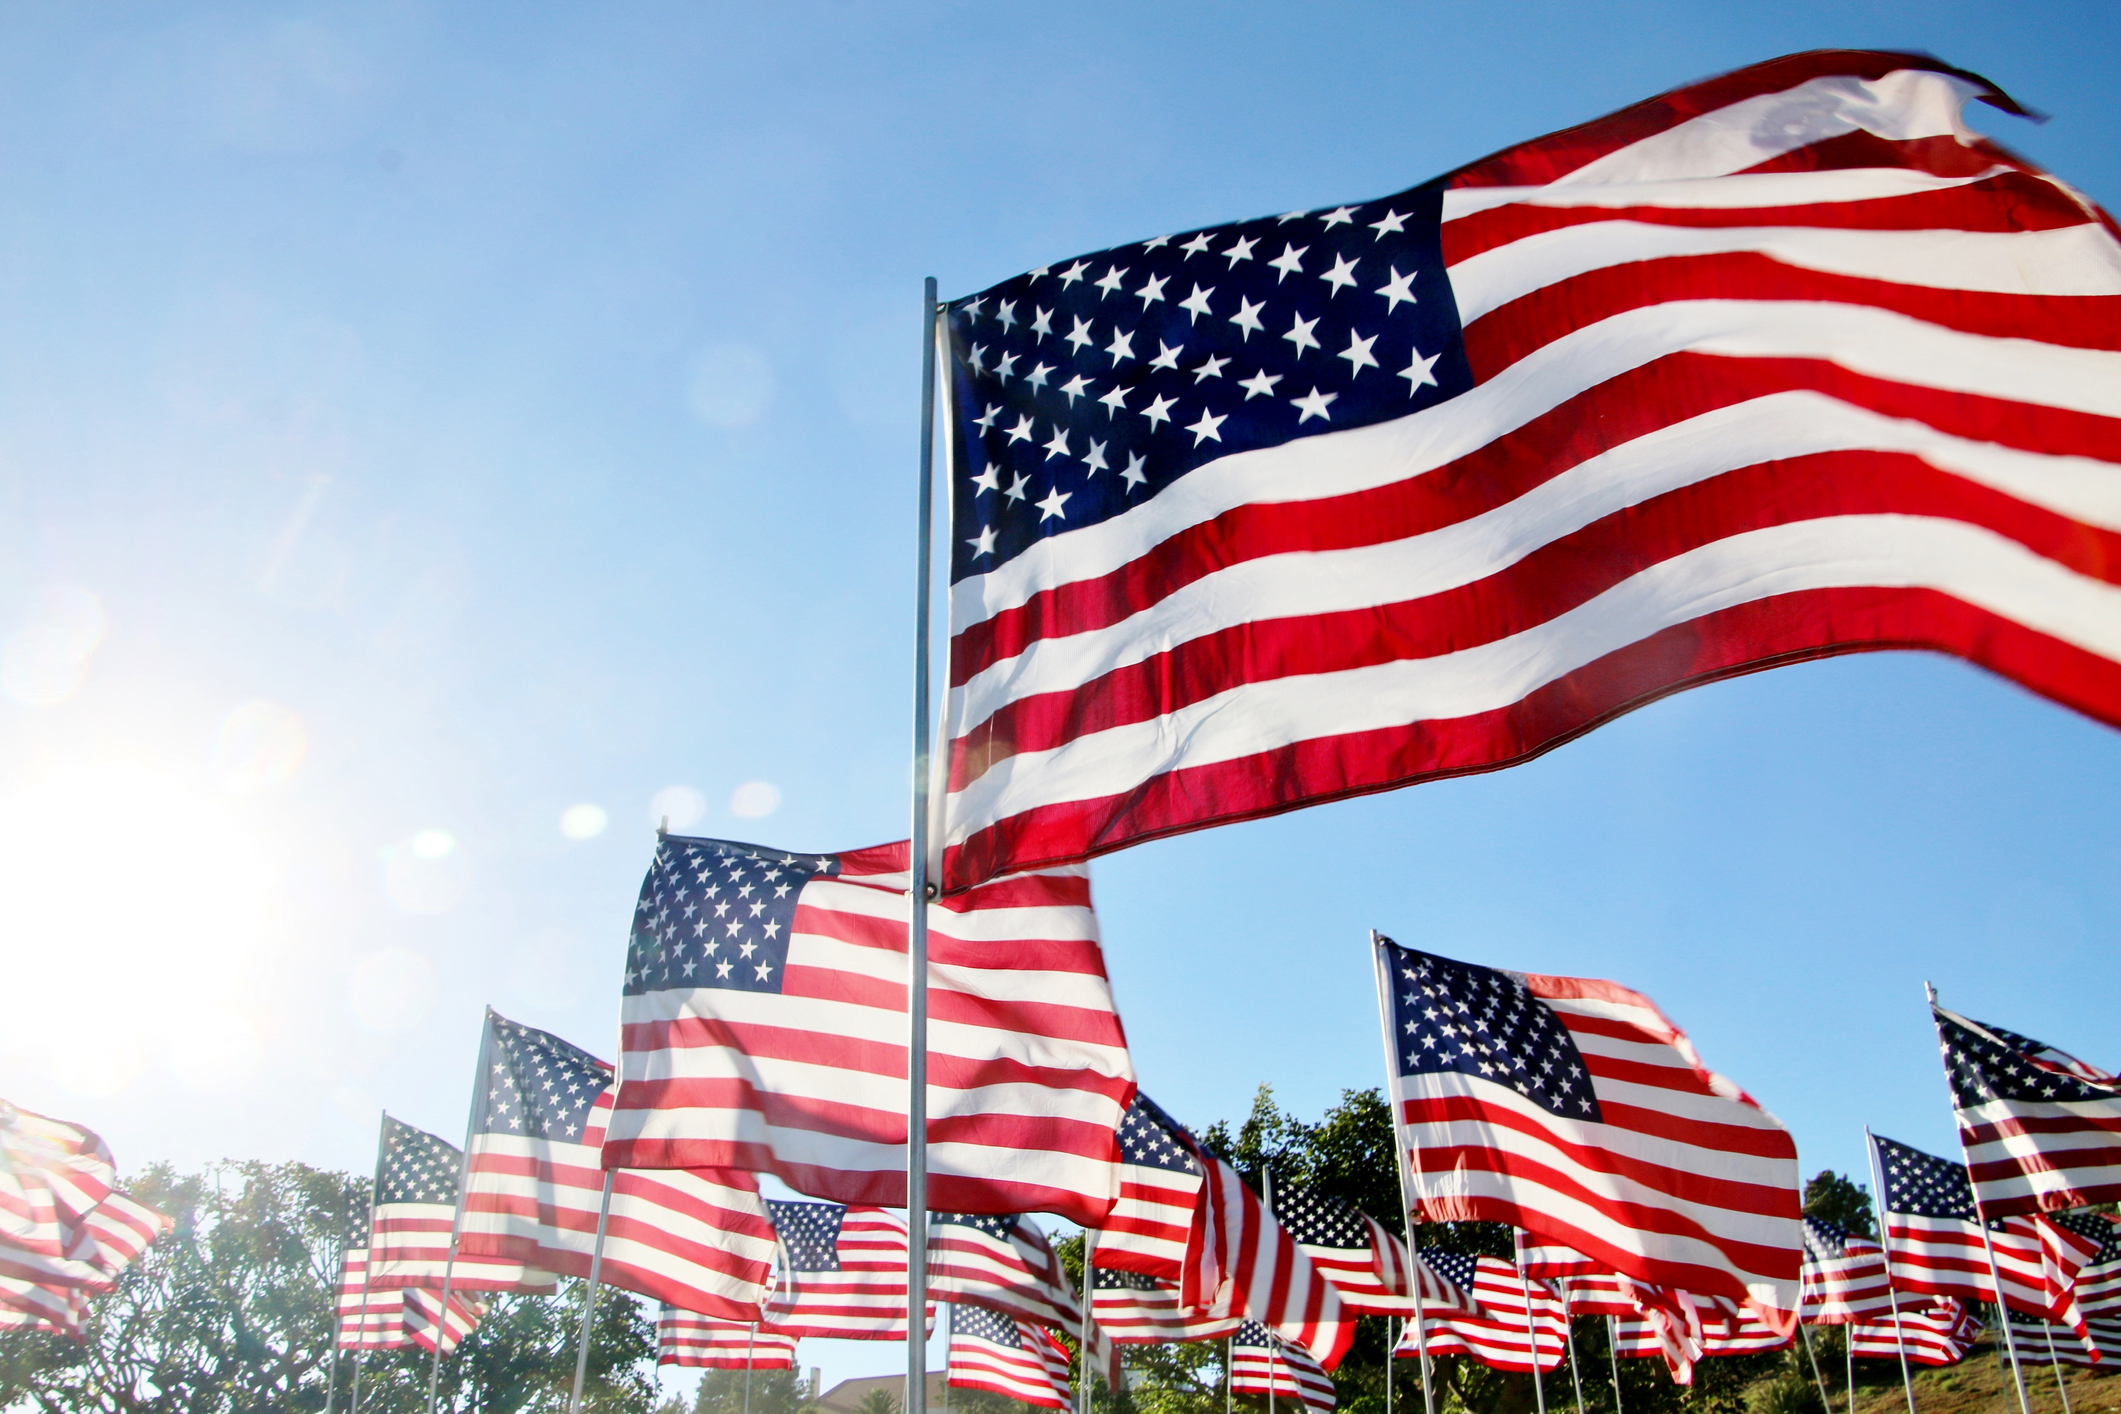 United States flags blow in the wind in Malibu, CA